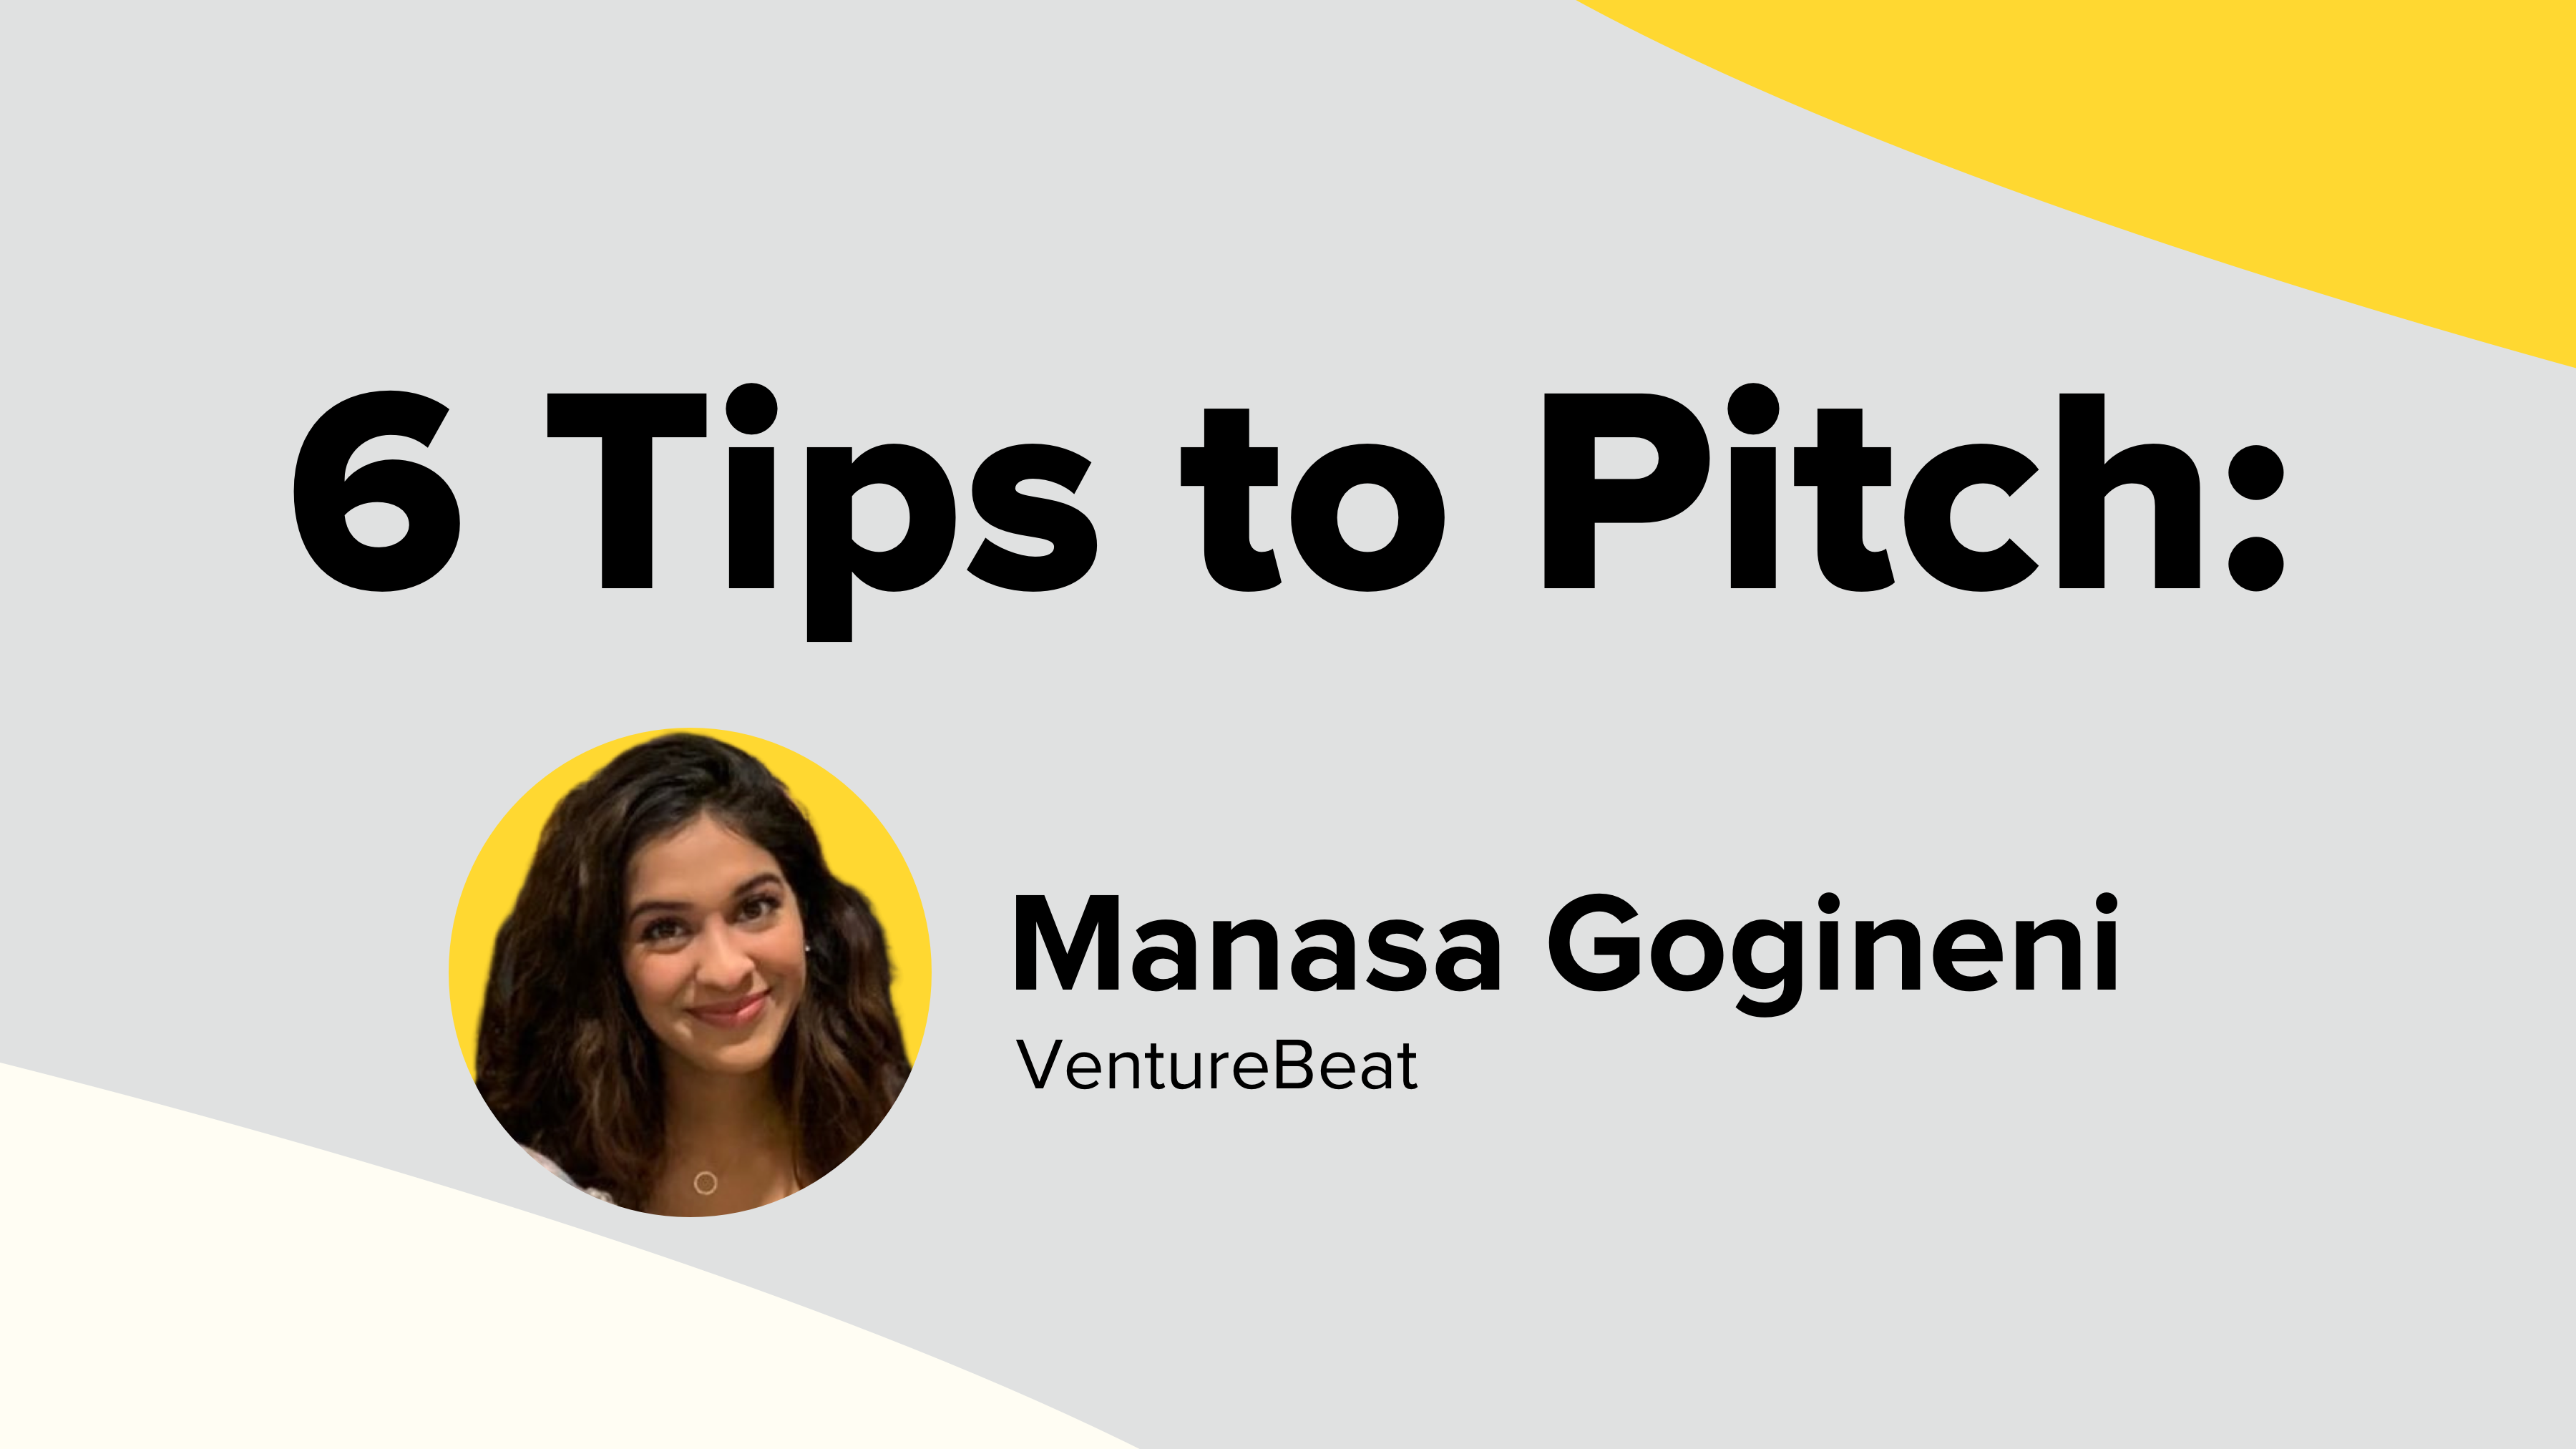 6 Tips to Pitch Manasa Gogineni of VentureBeat